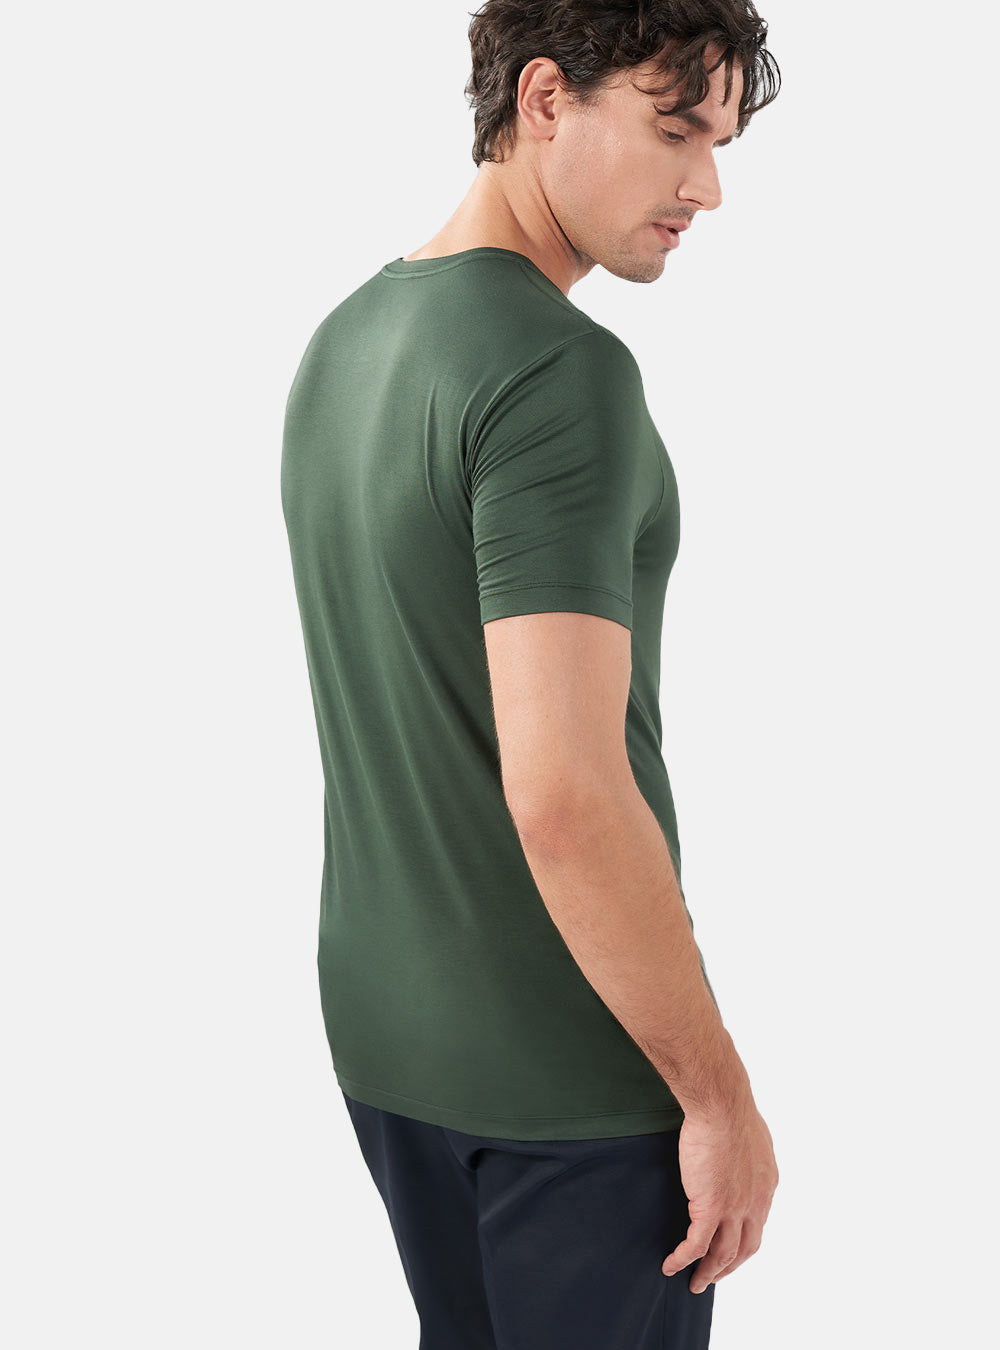 DAVID ARCHY Men's Undershirt Bamboo Rayon Moisture-Wicking T-Shirts Stretch  Crewneck/V-Neck Tees for Men – David Archy